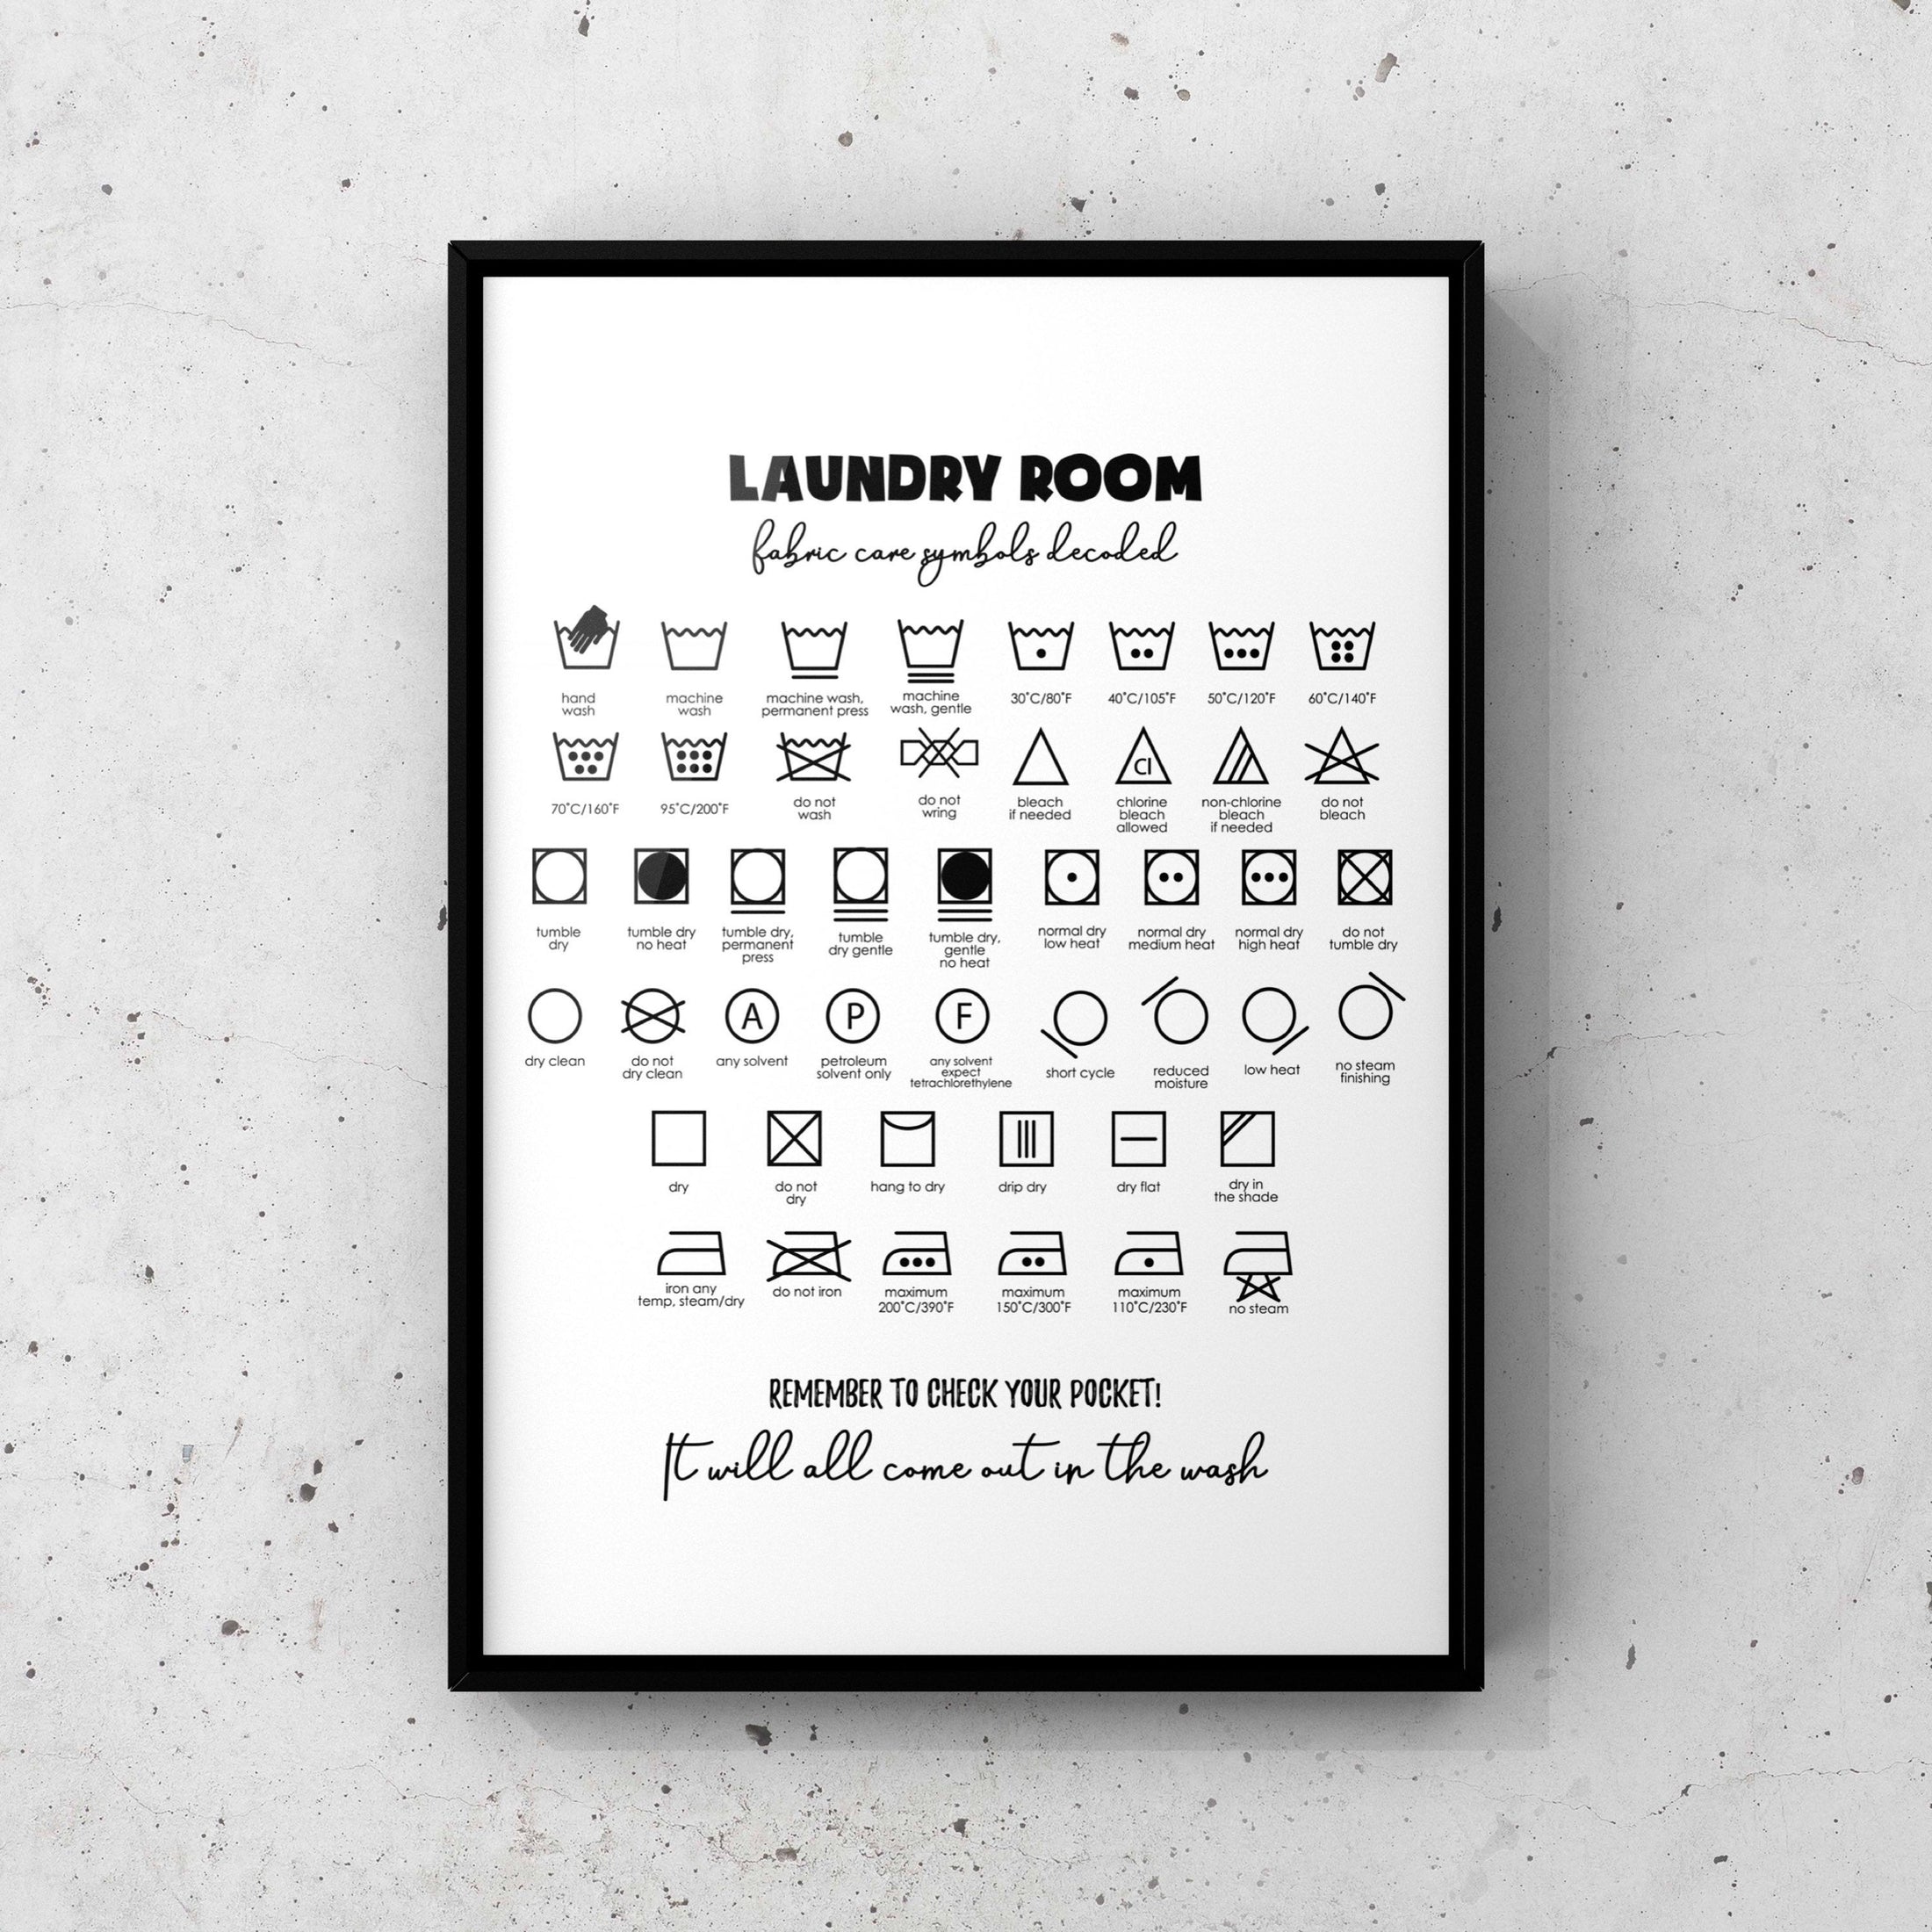 Laundry care instructions symbols